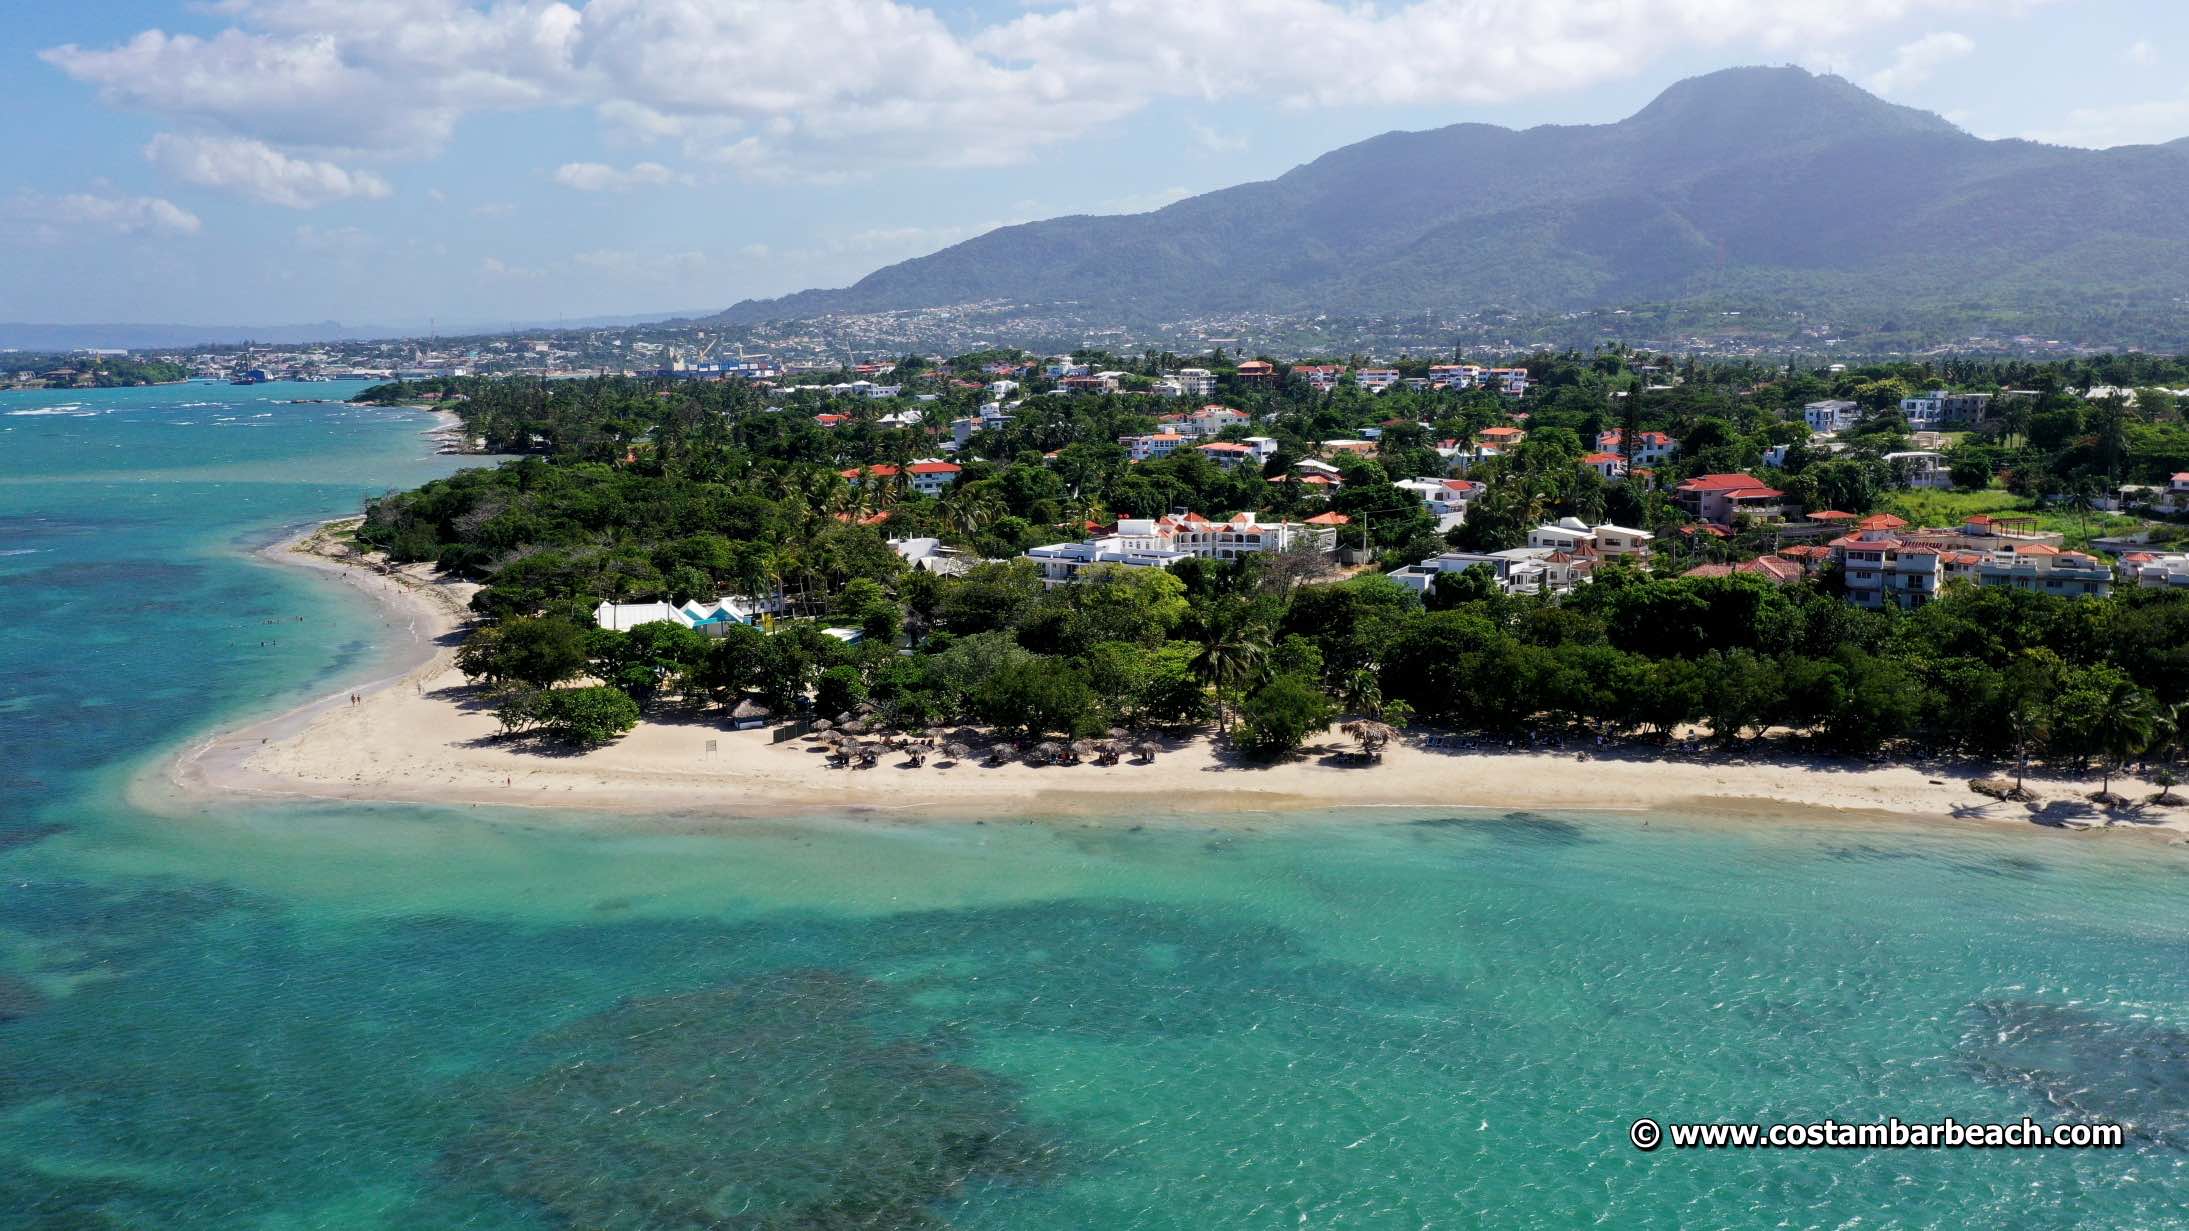 Drone view of Costambar Beach